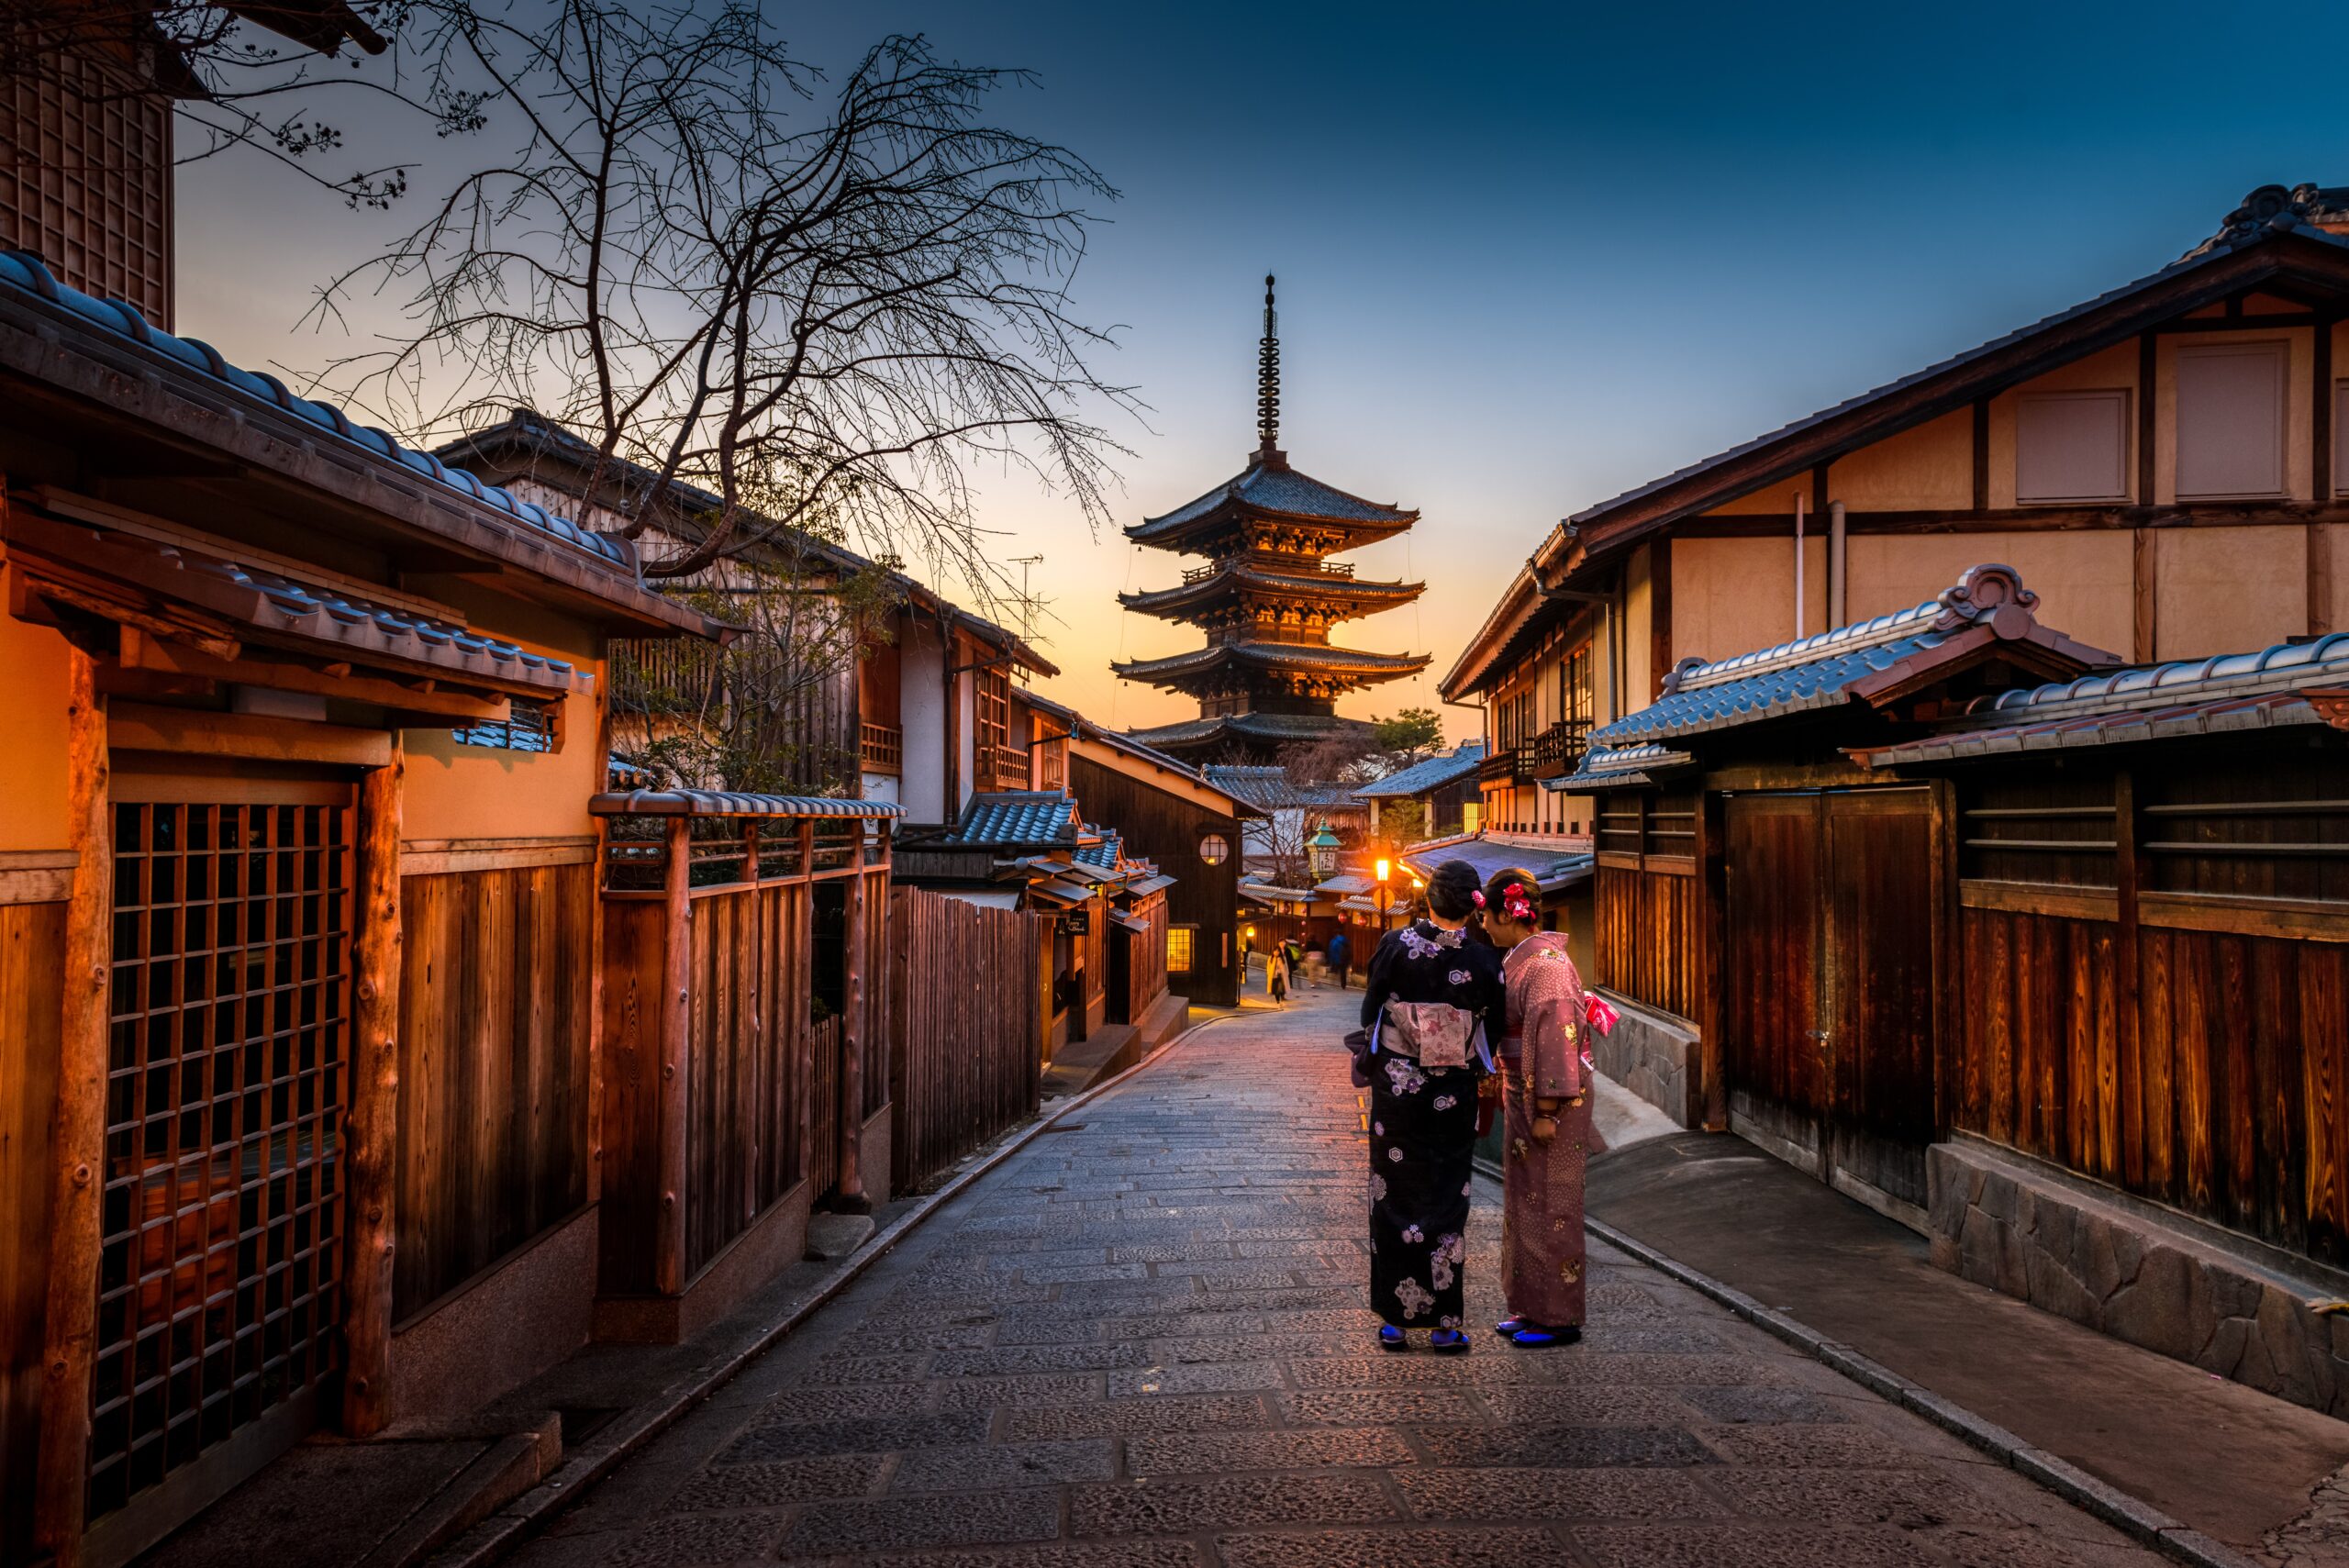 Kyoto, Japan (Photo Credit: Sorasak on Unsplash)